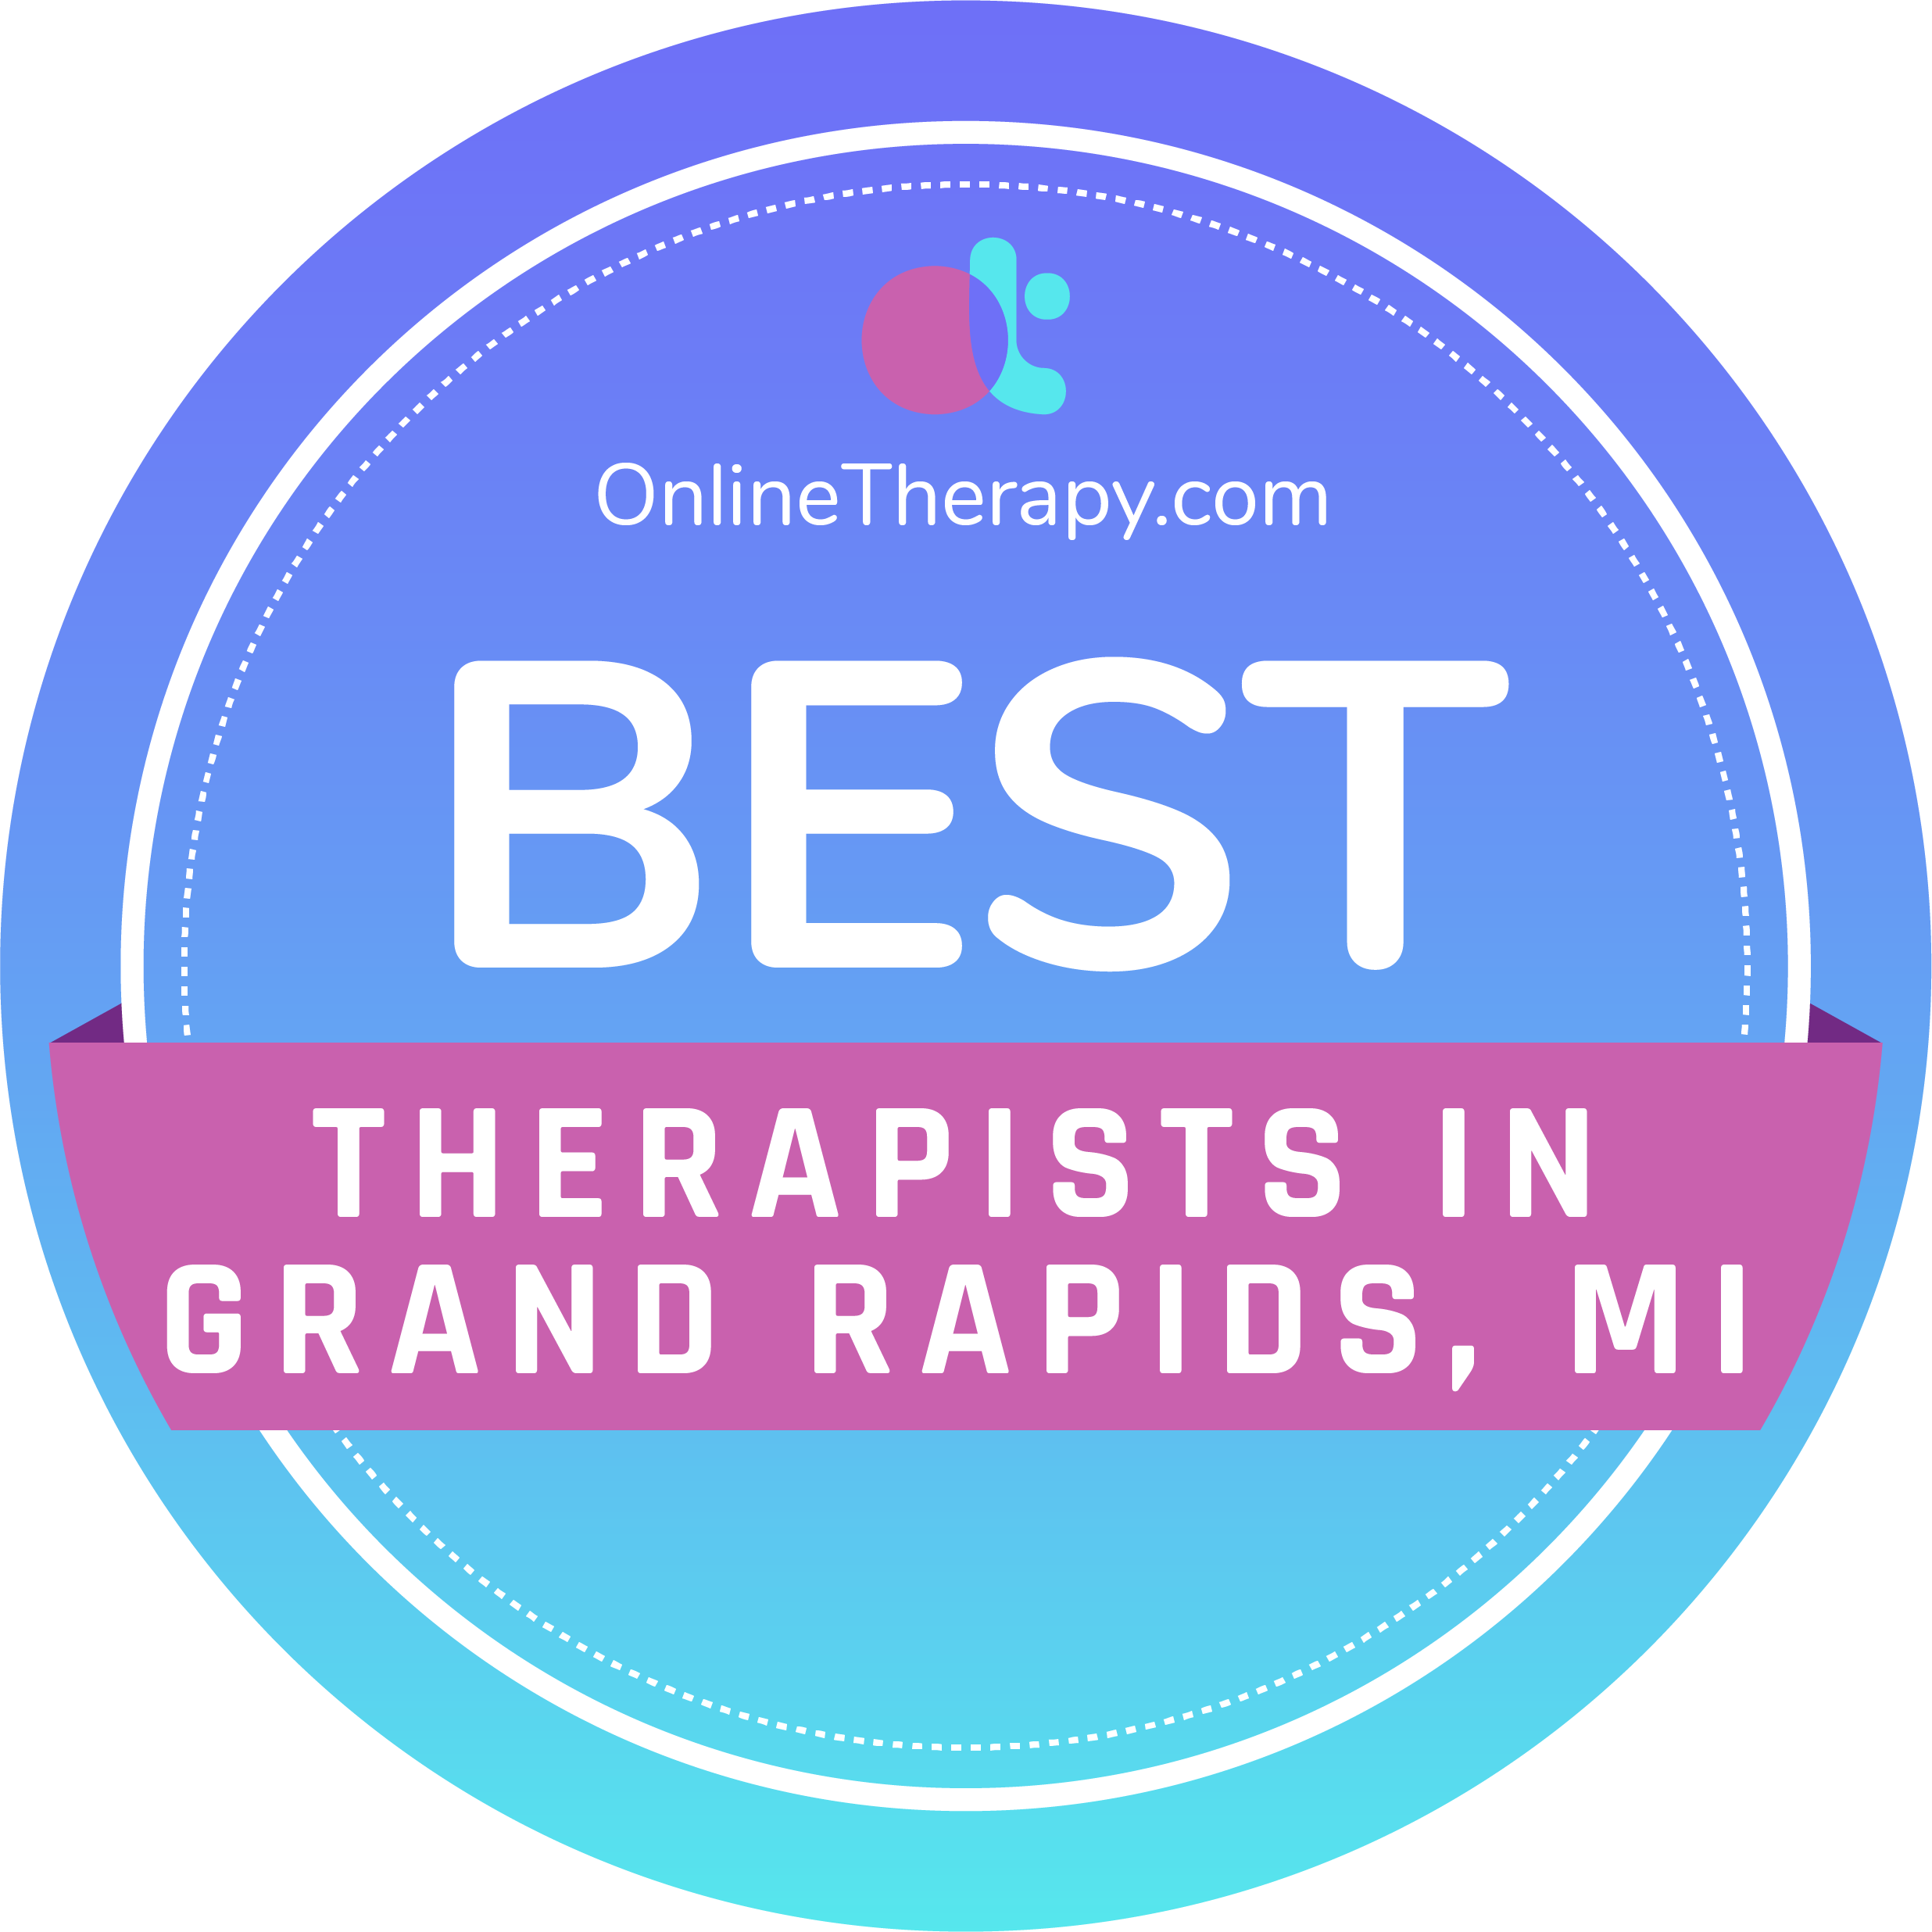 Therapists in GRAND RAPIDS